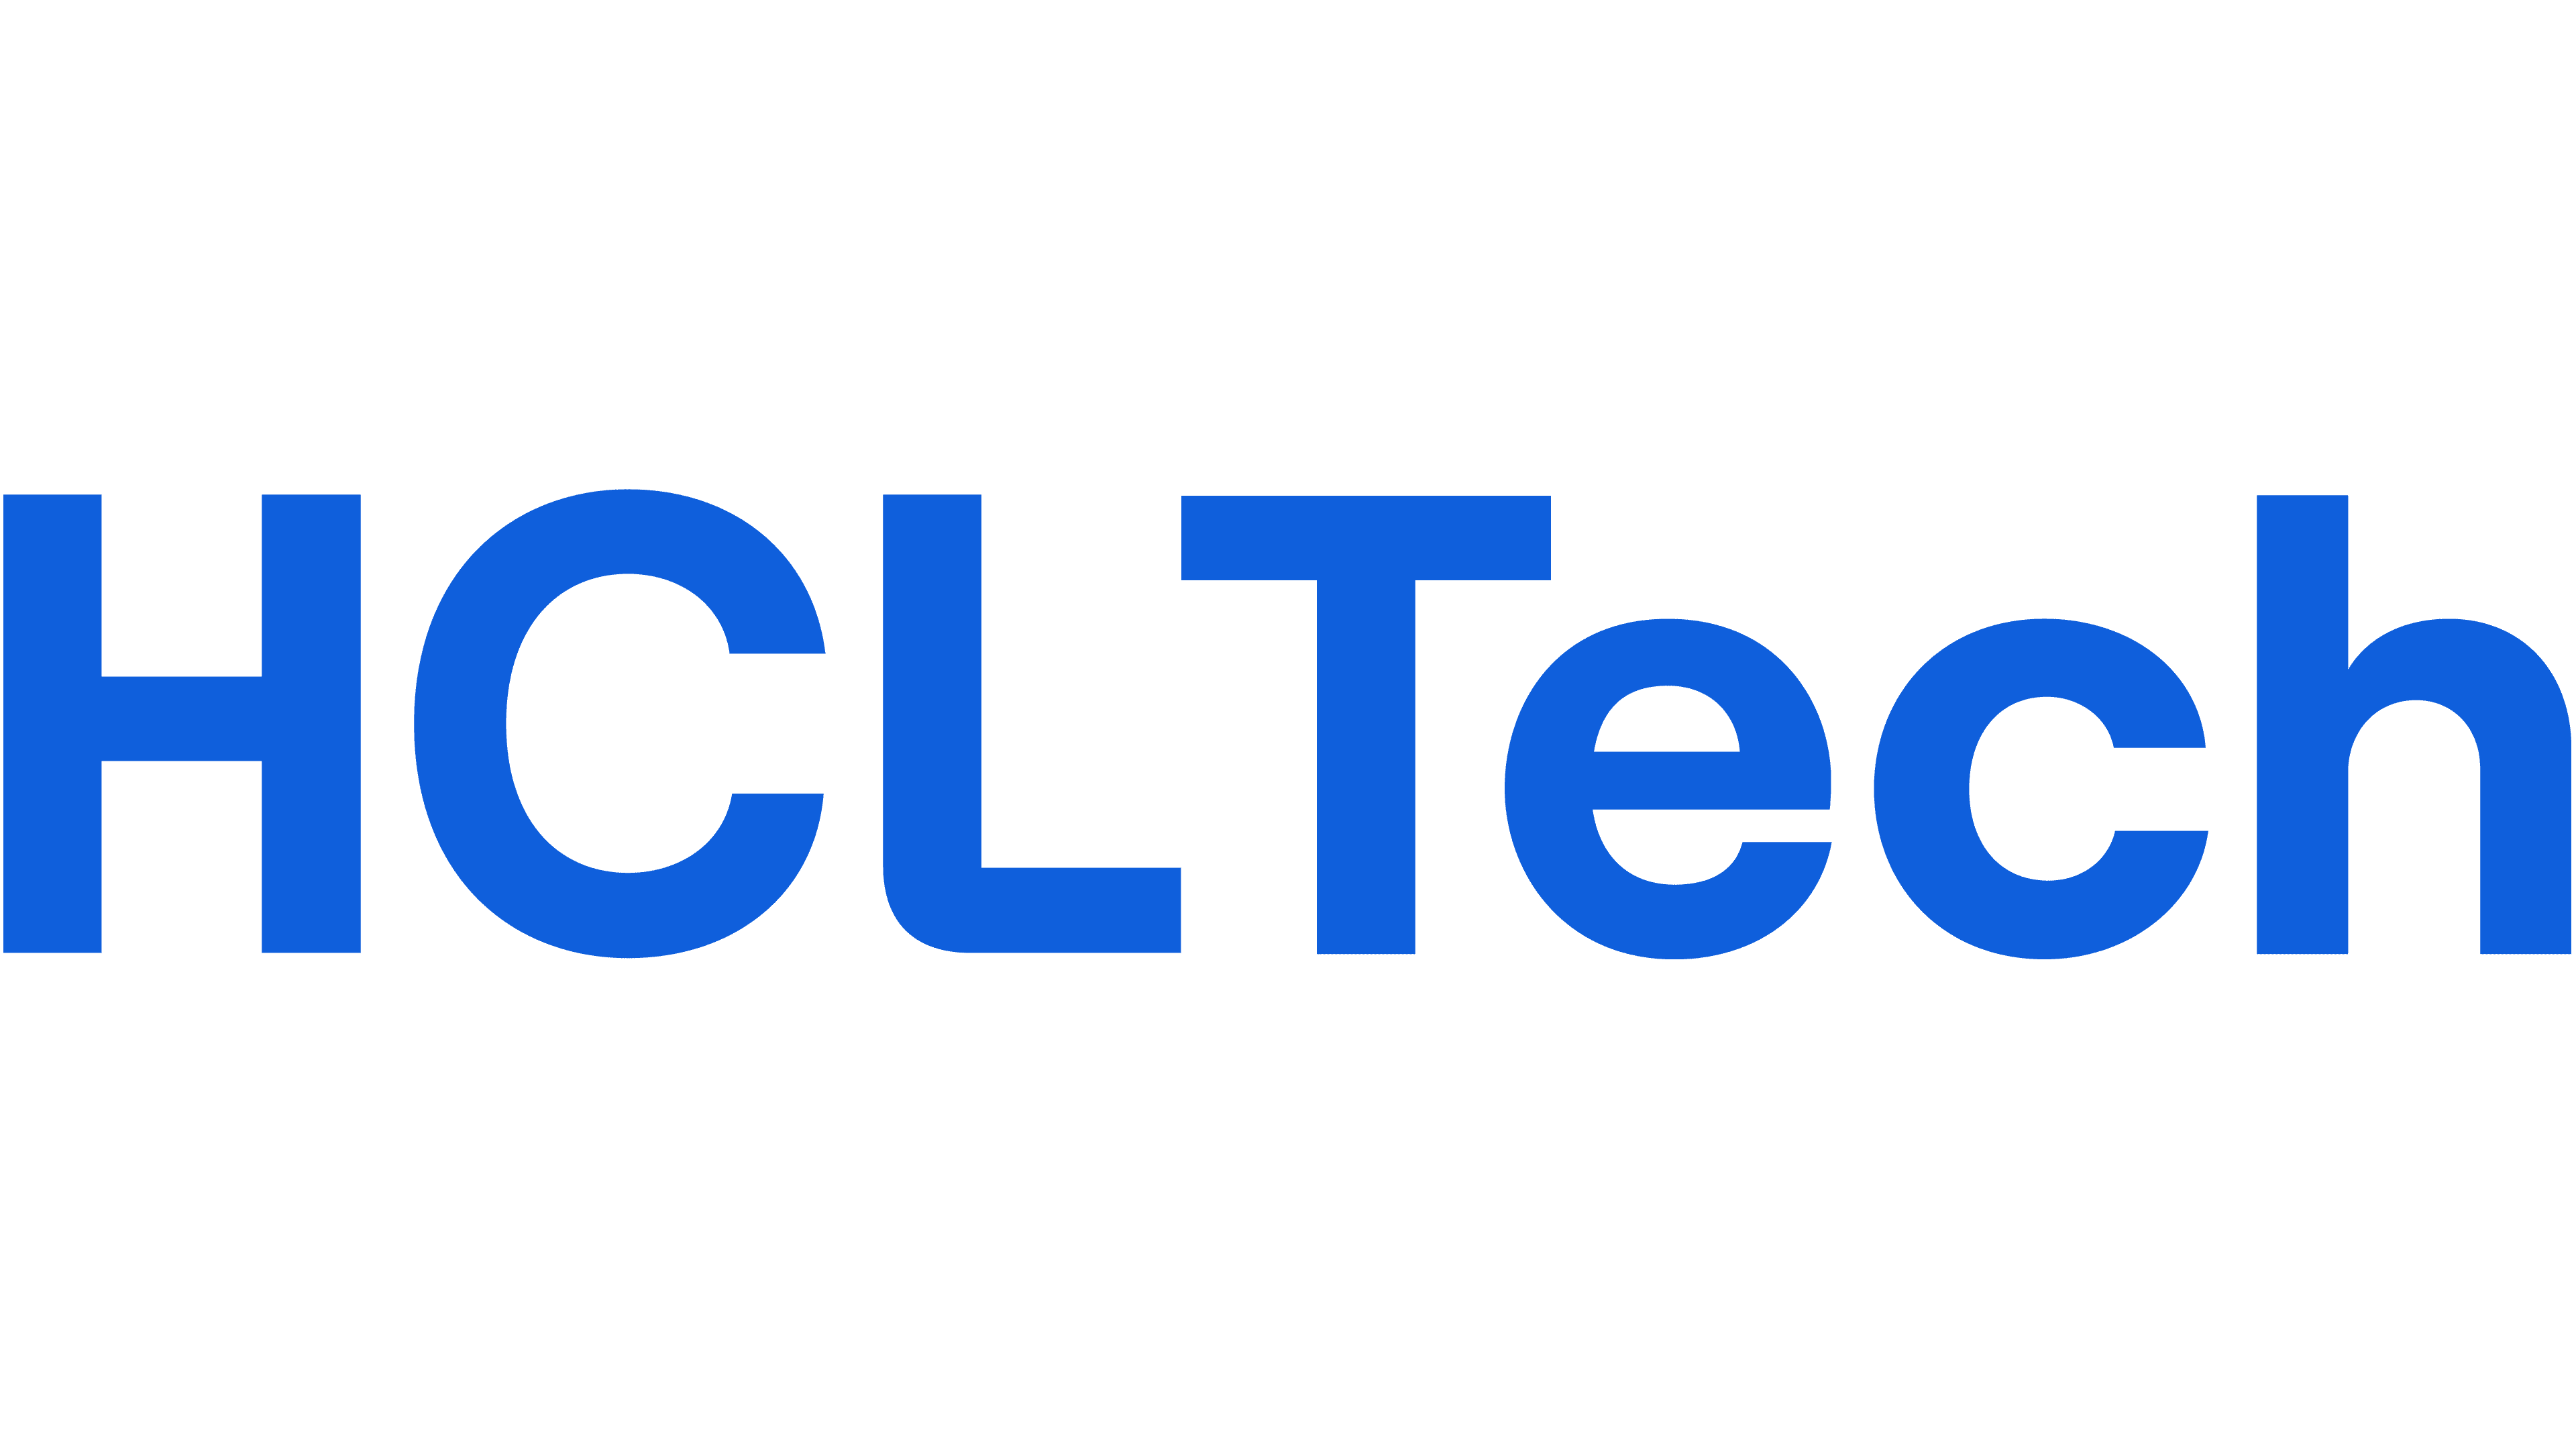 HCL Technologies - Crunchbase Company Profile & Funding